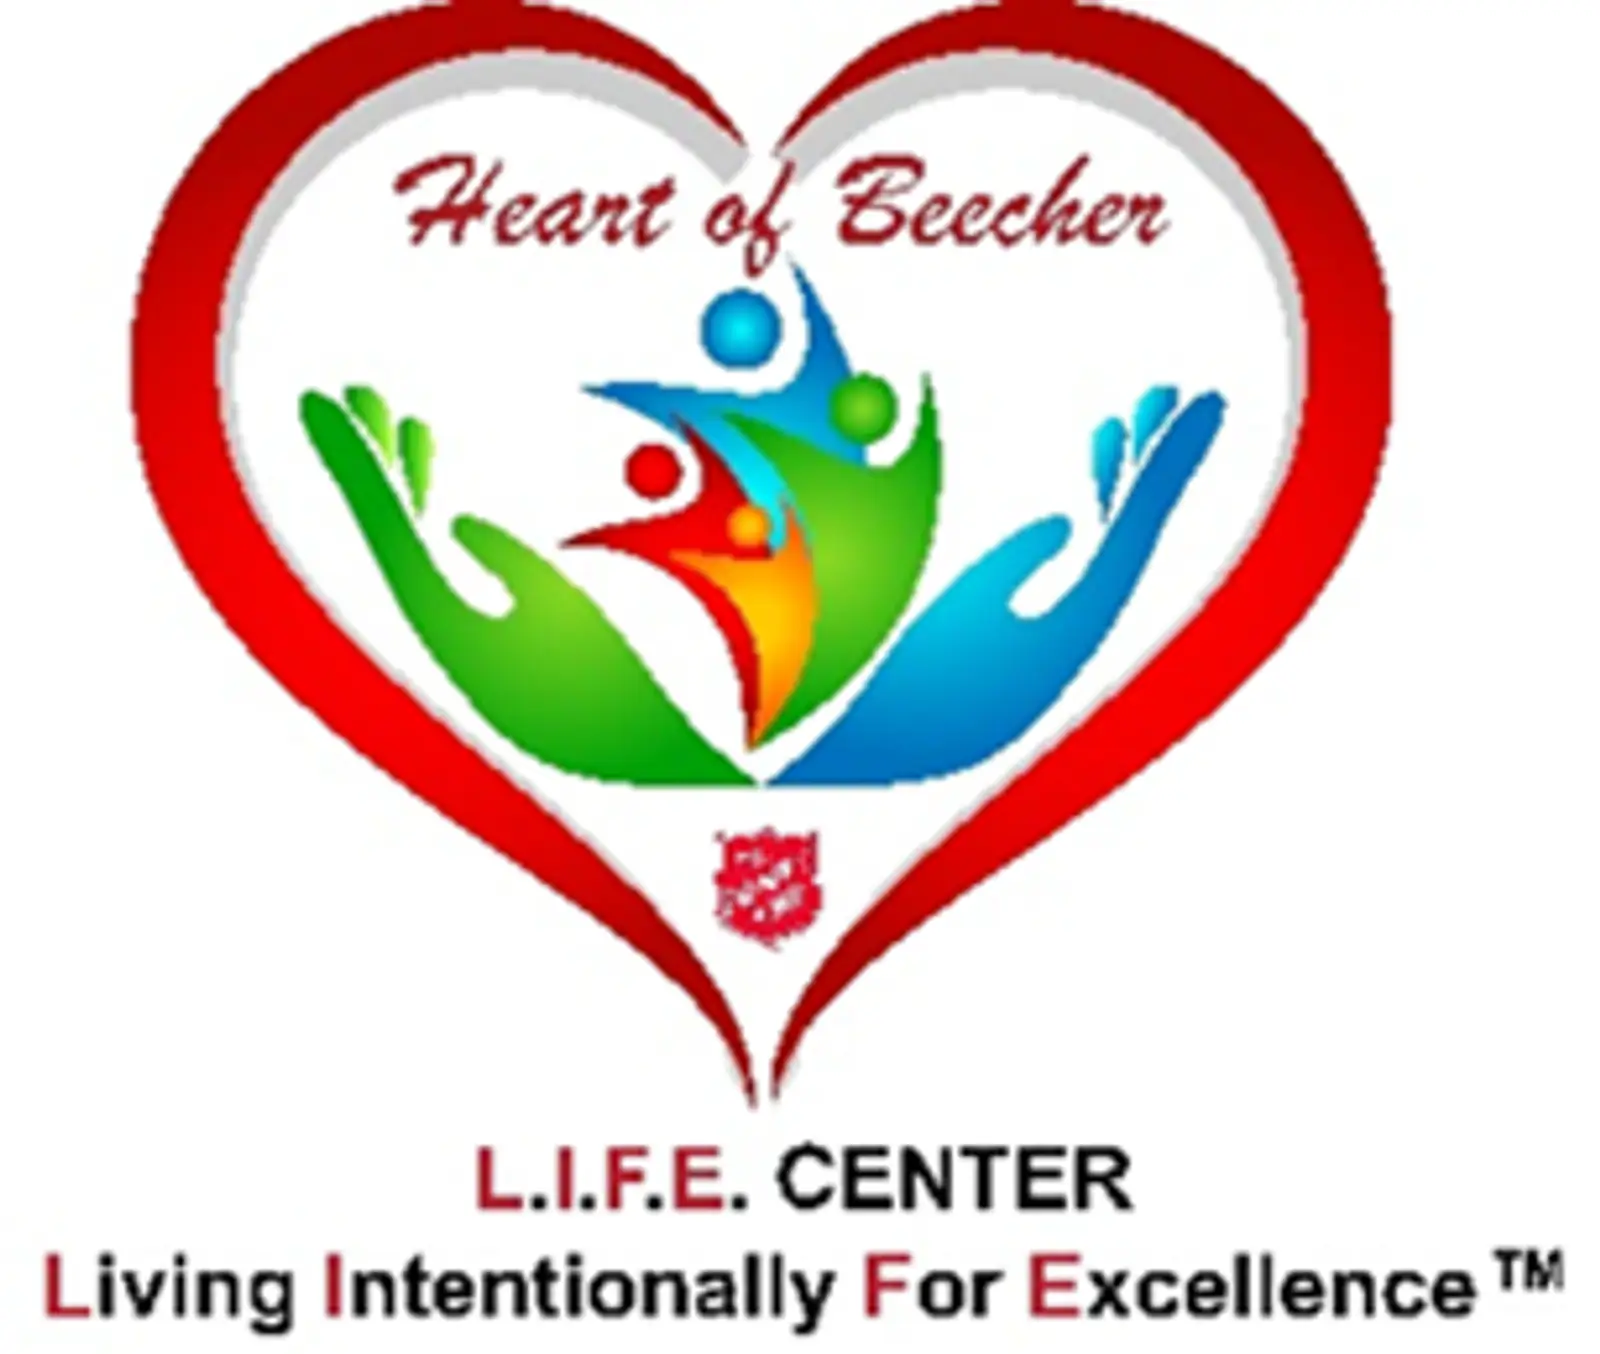 Life of Becker - Life Center logo